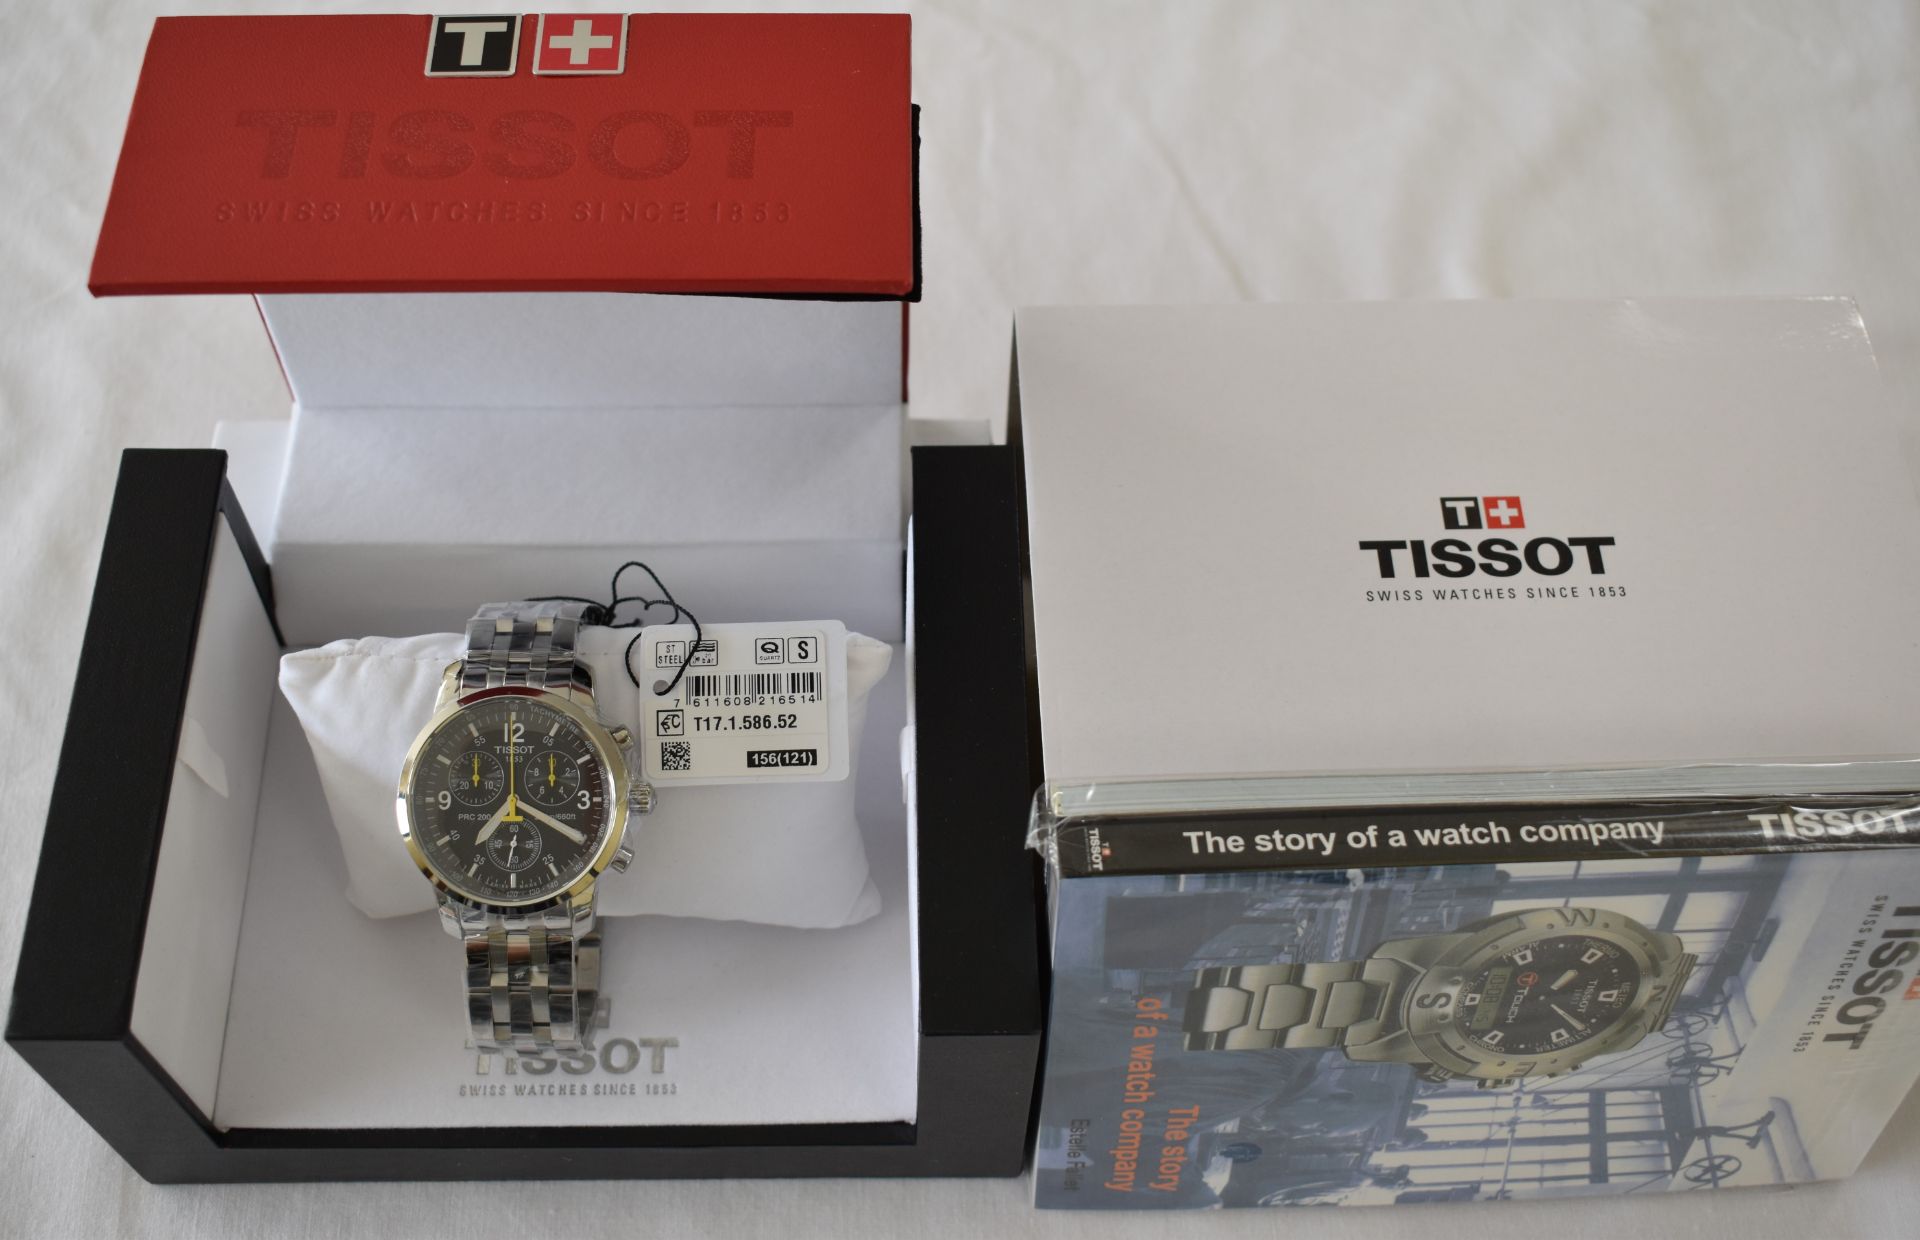 Tissot T17.1.586.52 Mens Watch - Image 2 of 2